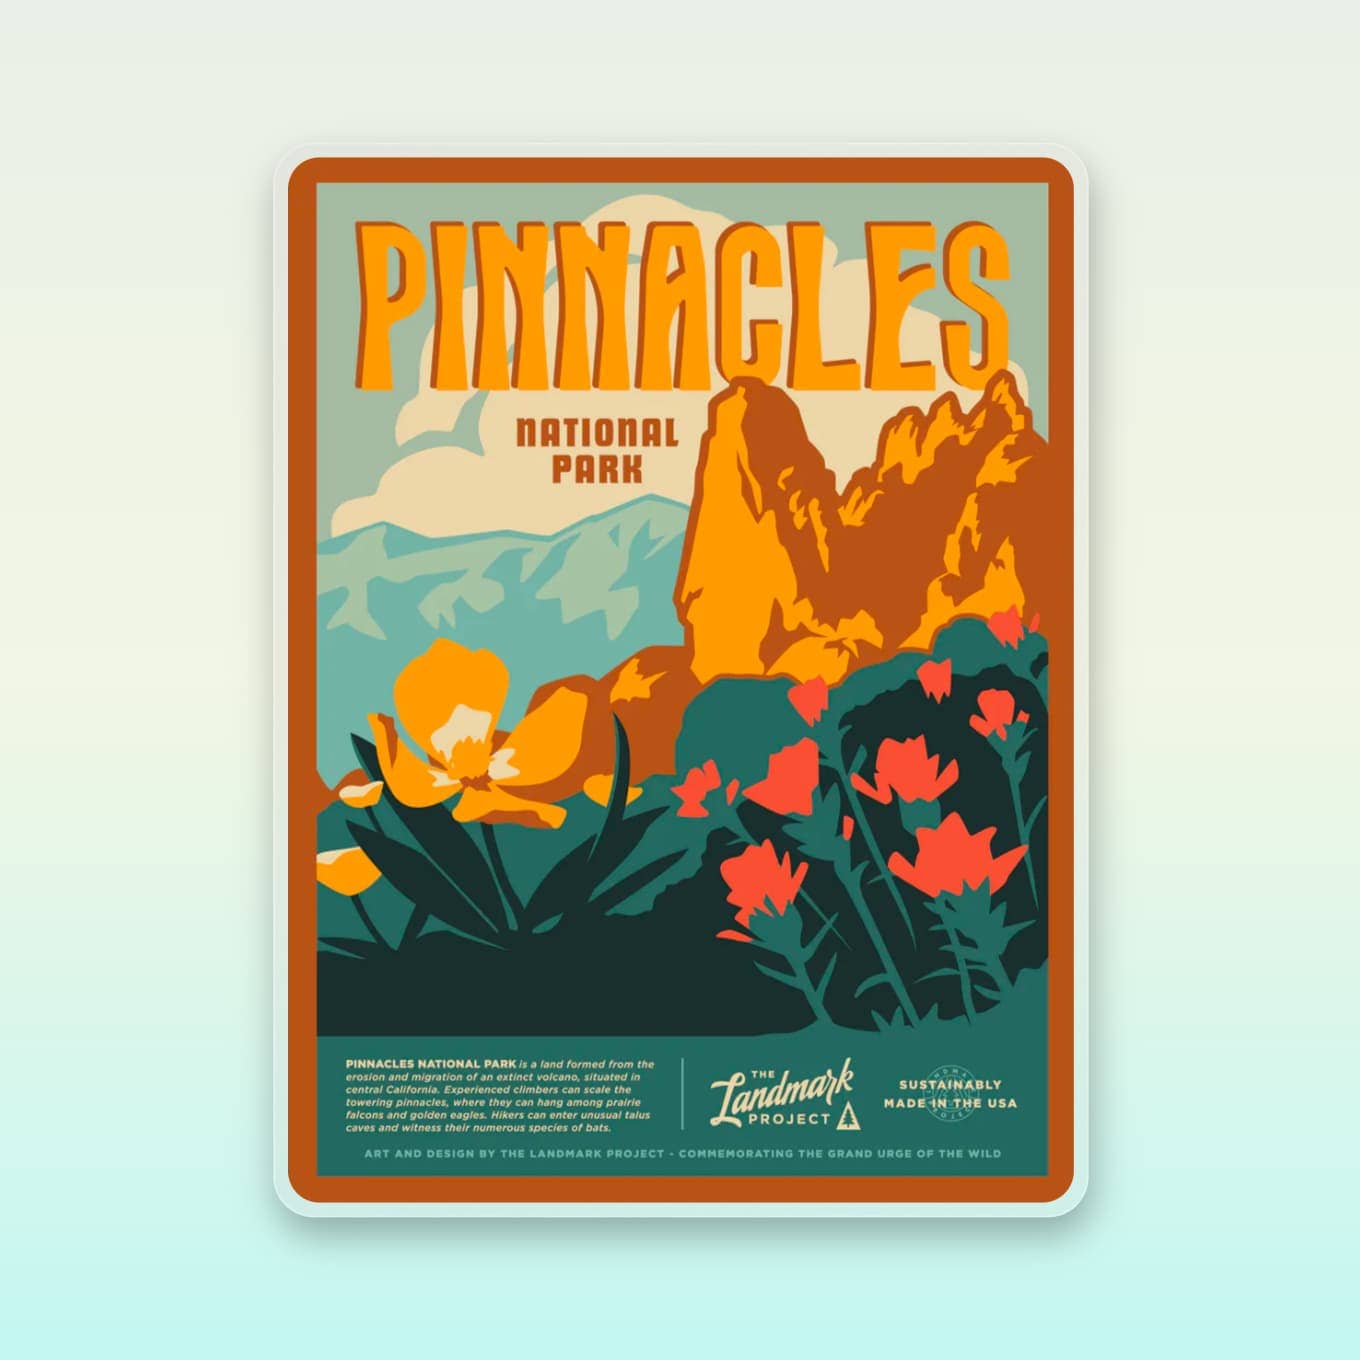 Vintage nationale park poster voor Pinnacles National Park